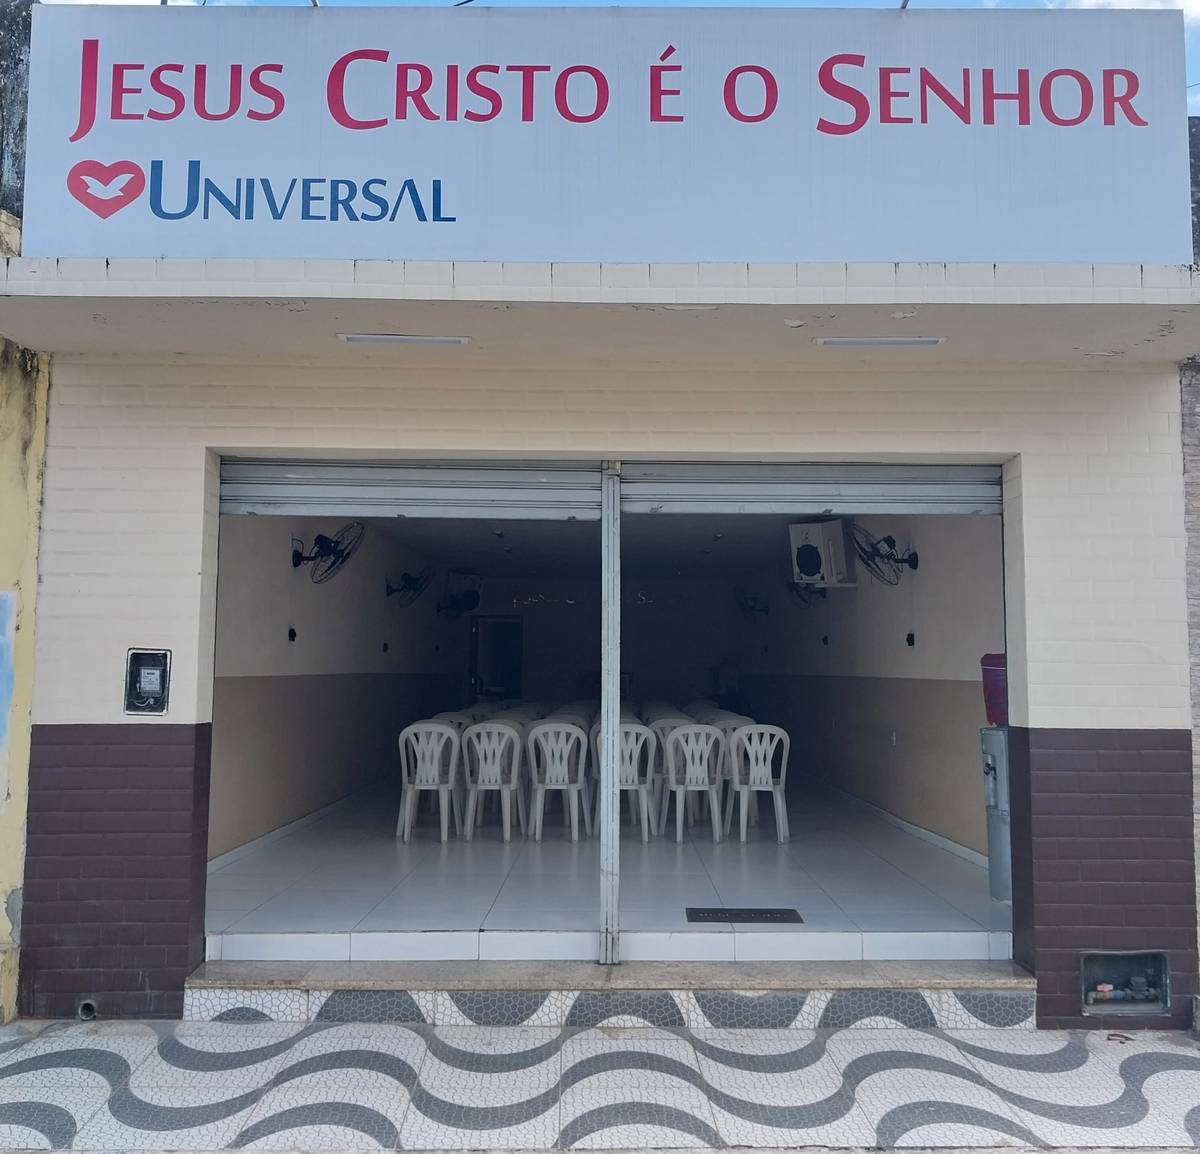 Igreja Universal RIO LARGO 2 - Rua Pedro Coutinho , 172 - Centro , Rio Largo - Alagoas  - 57100000 - Brasil, 172 - Centro  Rio Largo - Alagoas - Brasil